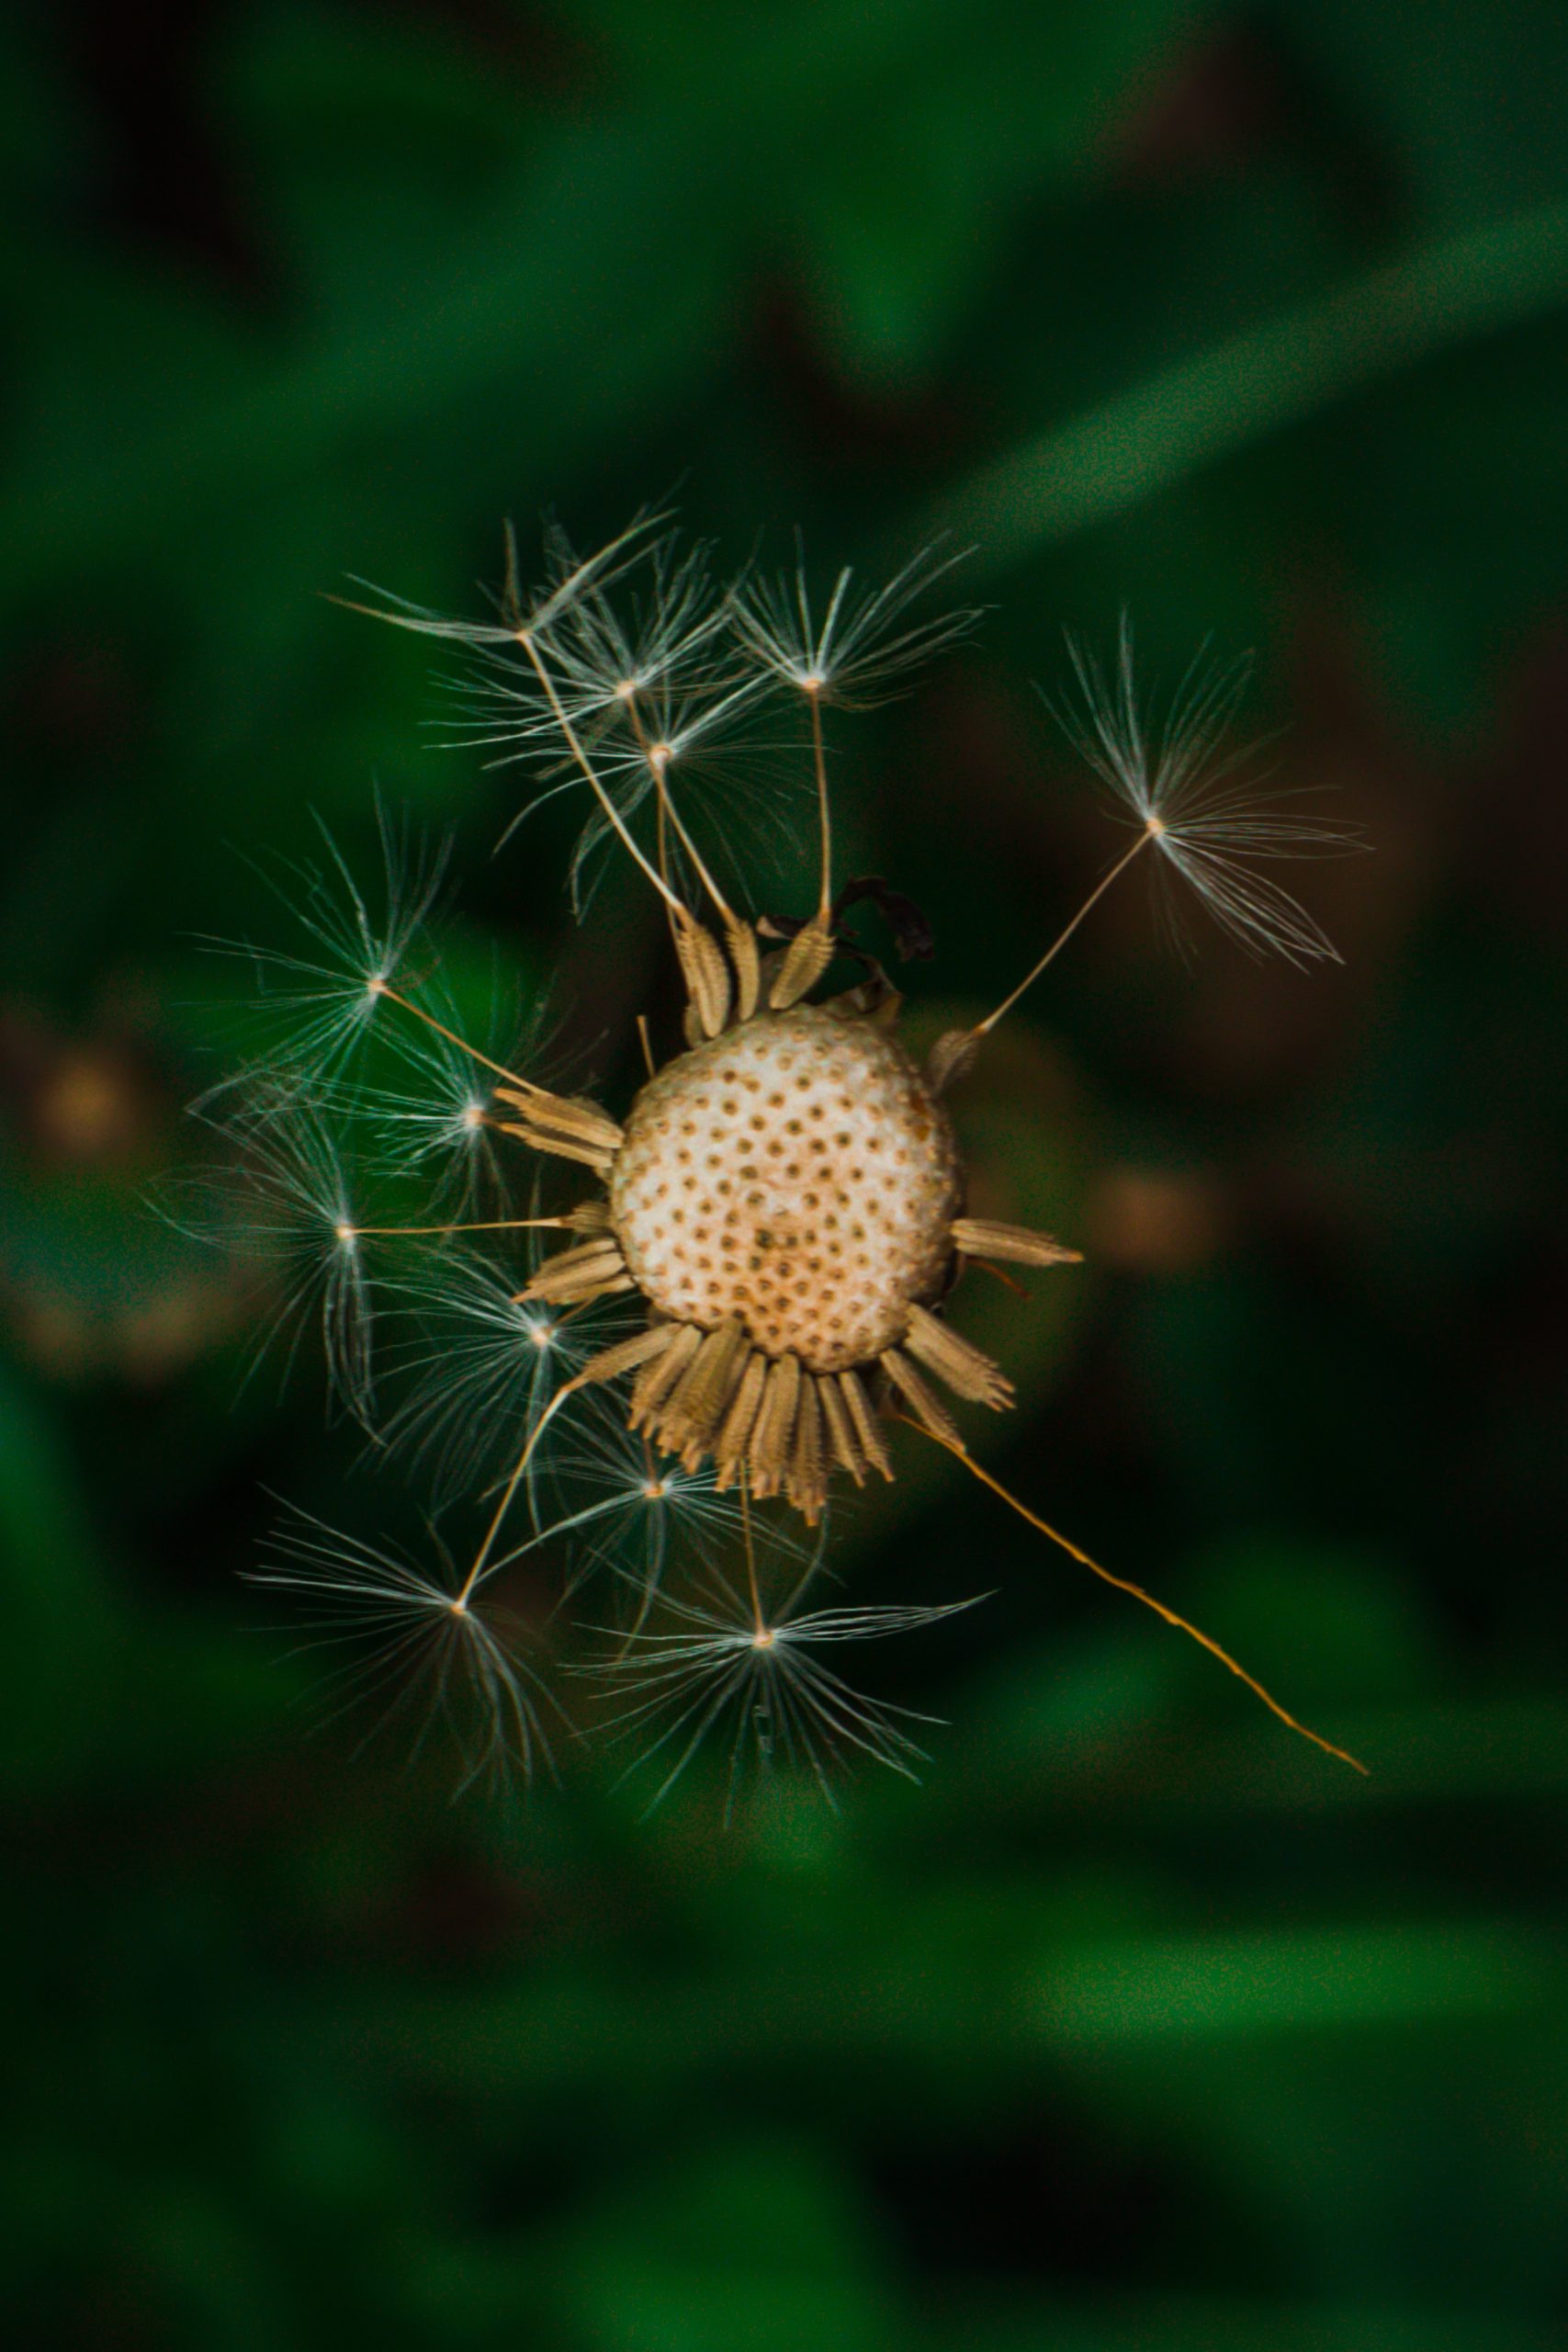 A dandelion